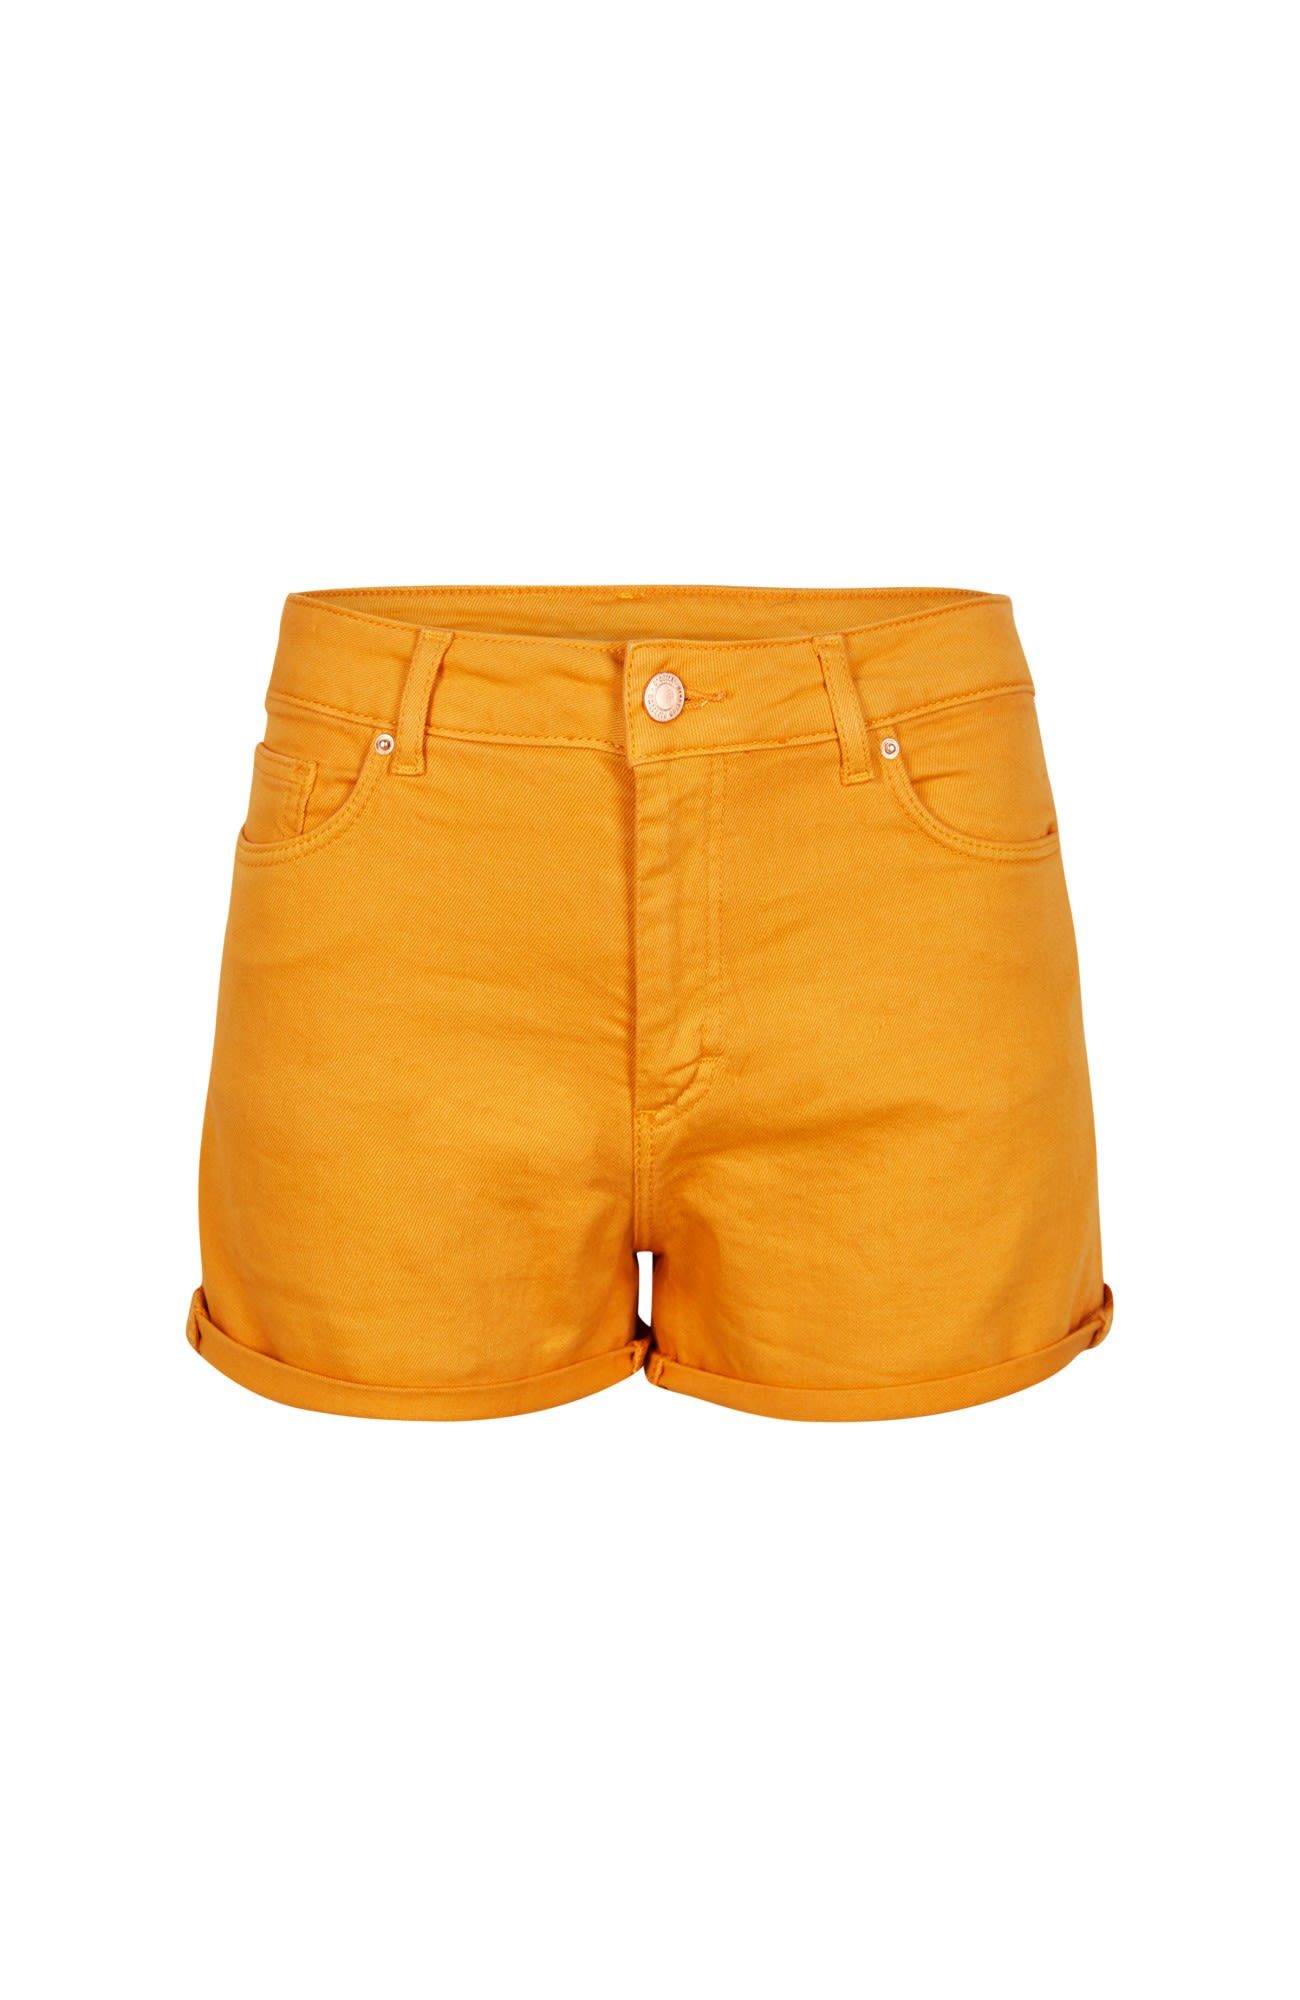 Pkt Oneill Damen Strandshorts W 5 O'Neill Shorts Essential Yellow Stretch